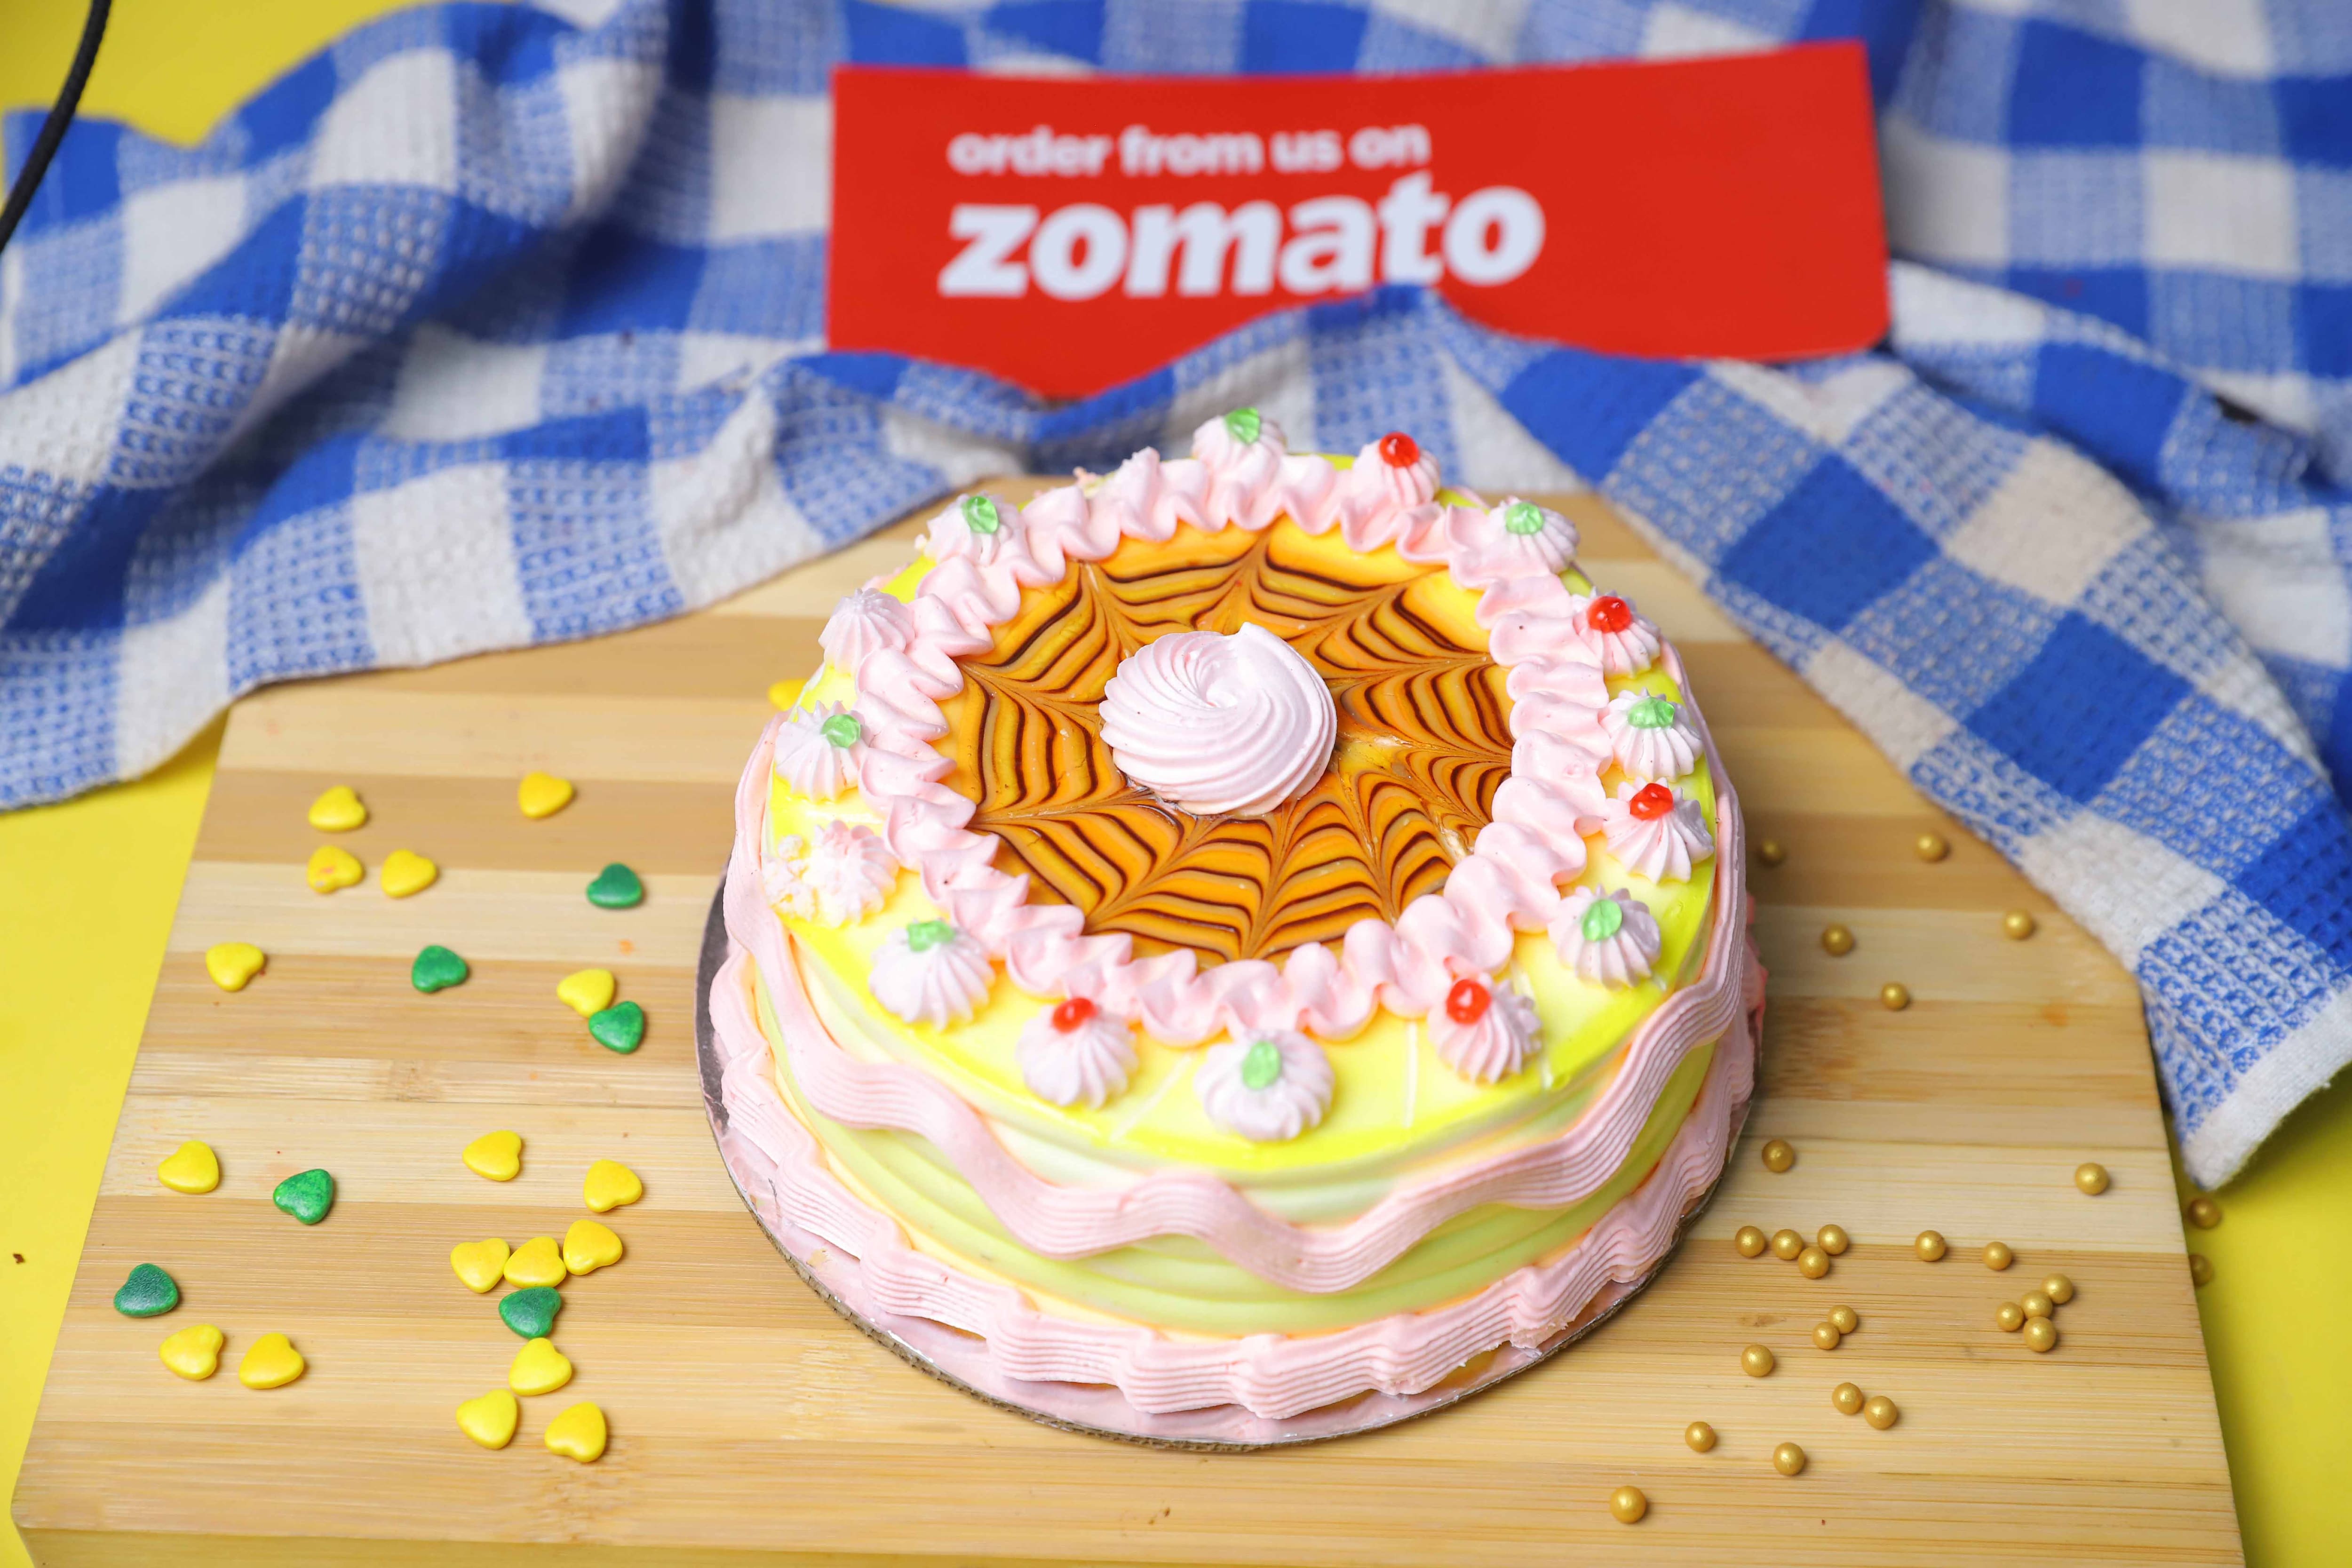 Cake 'On' Clock, Trilokpuri order online - Zomato